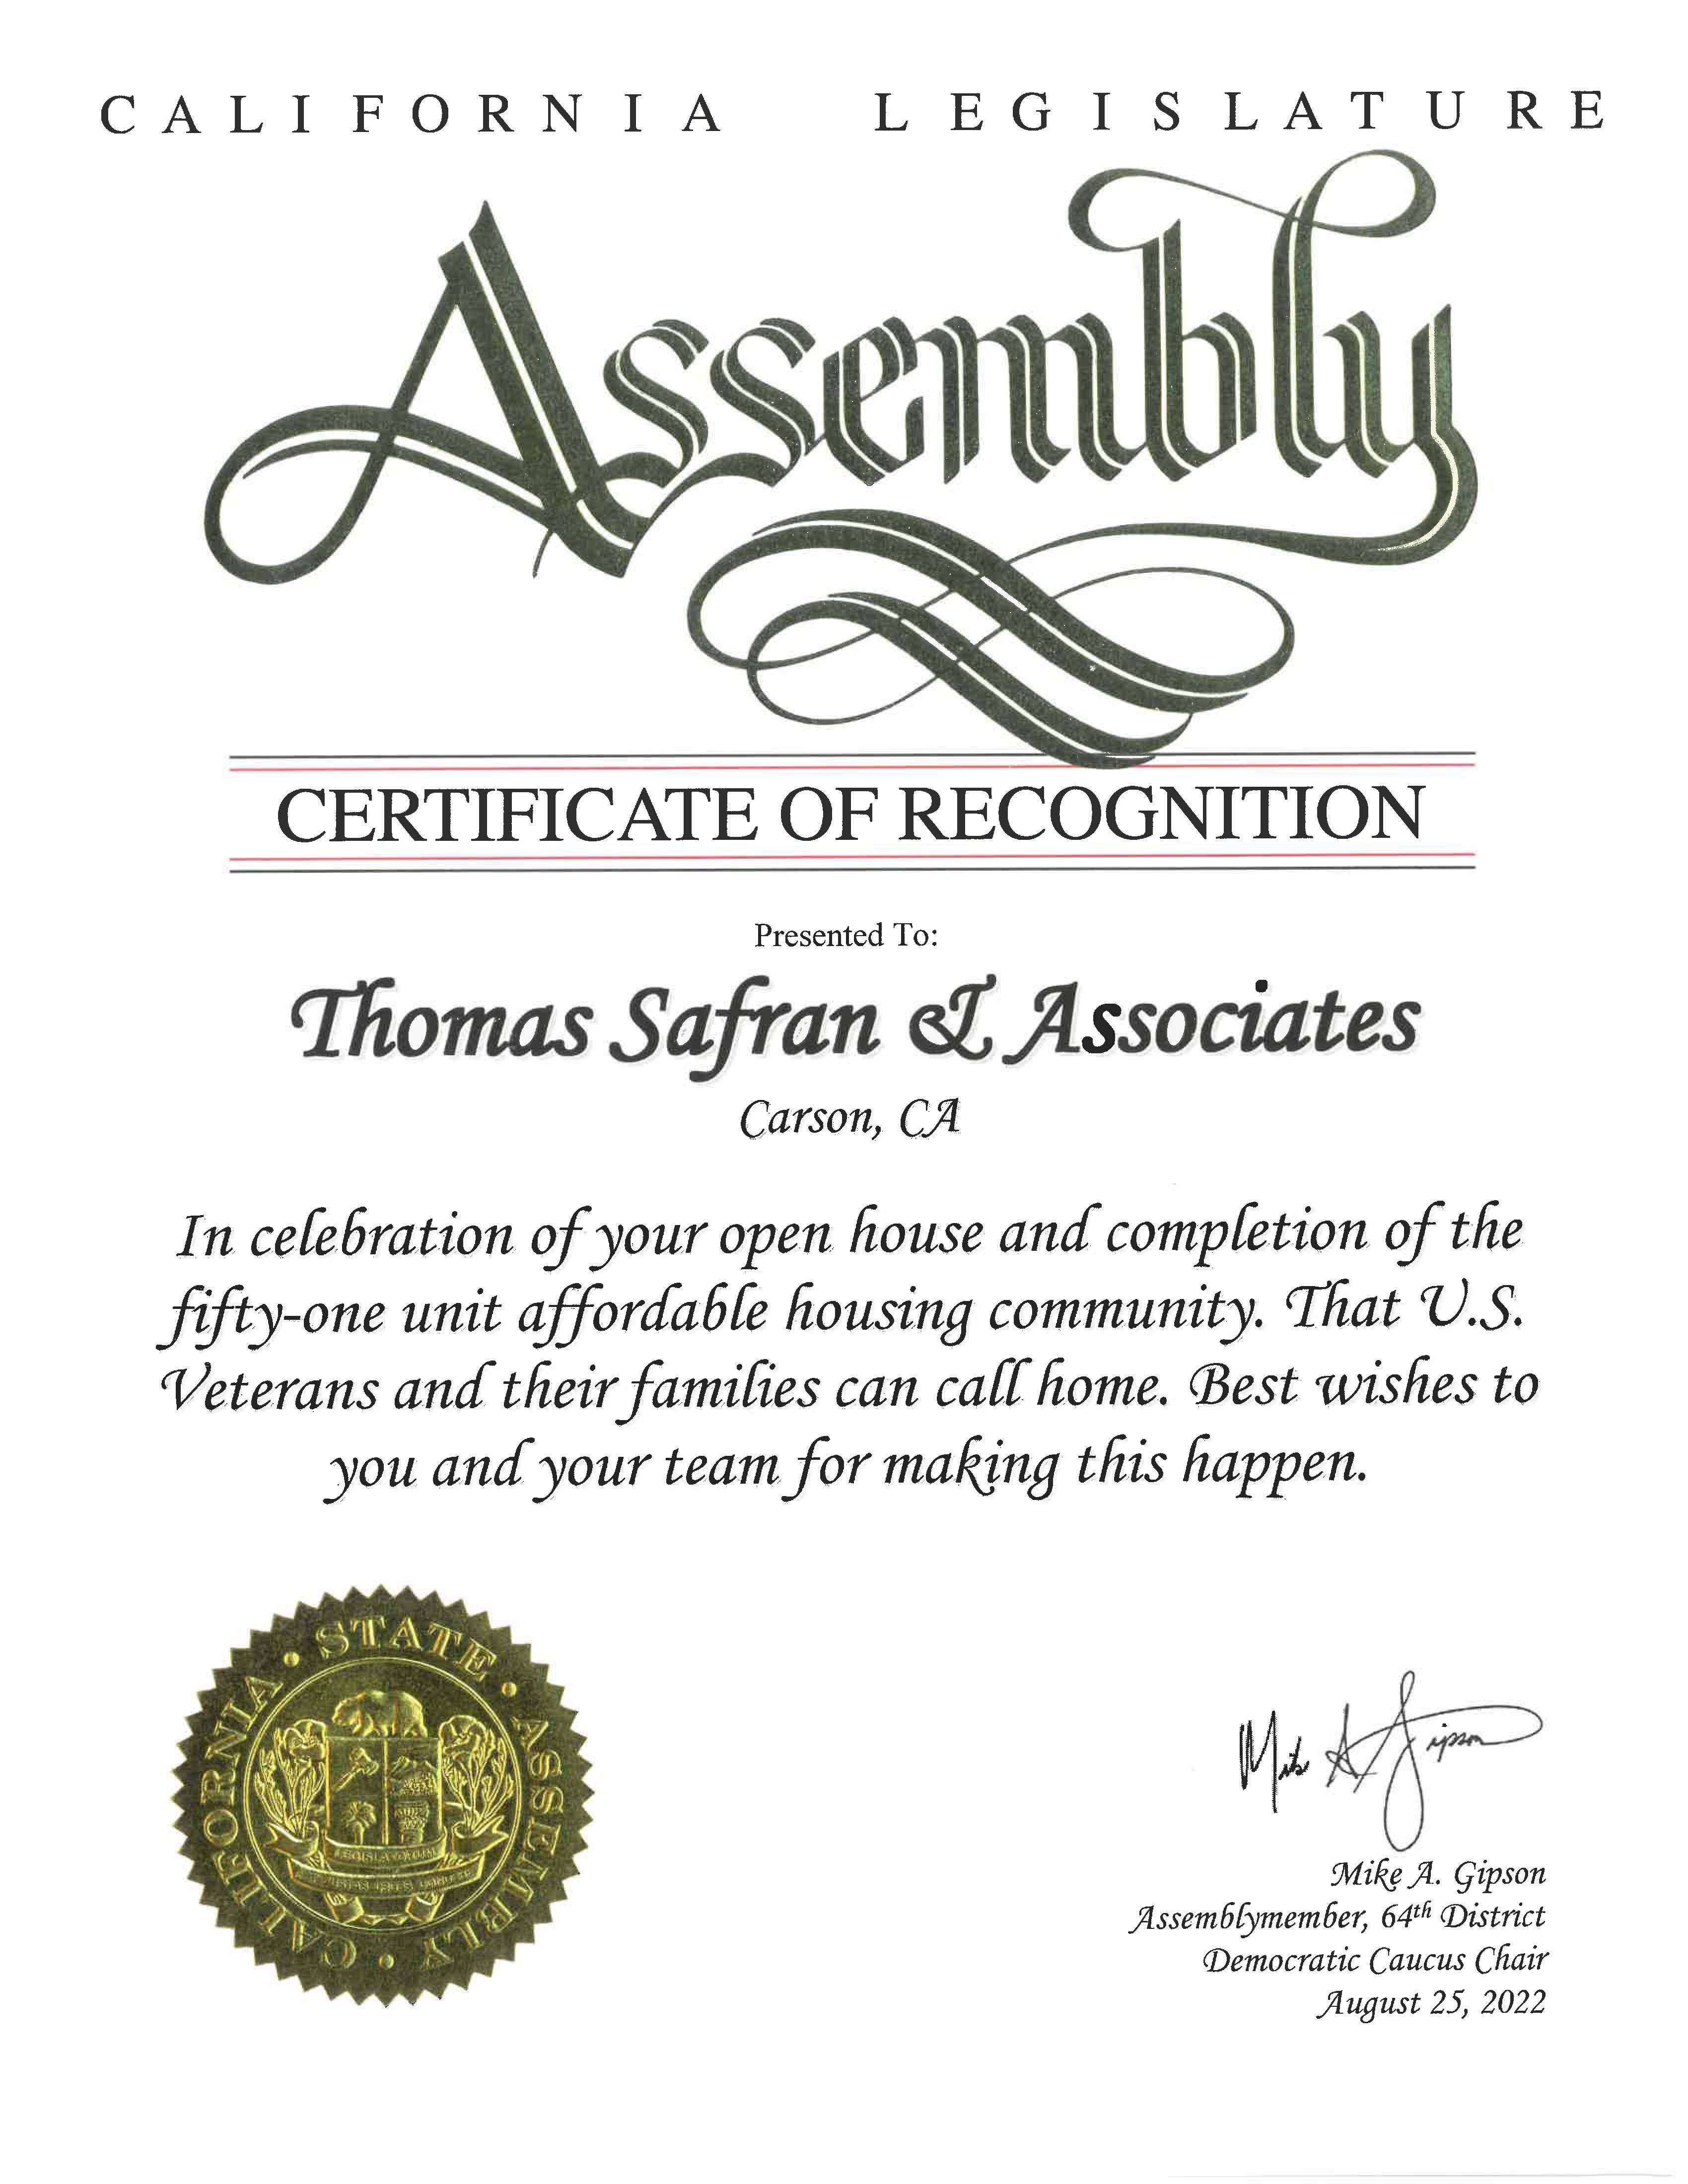 California Legislature Assembly - Certificate of Recognition 2022 - 
Thomas Safran & Associates